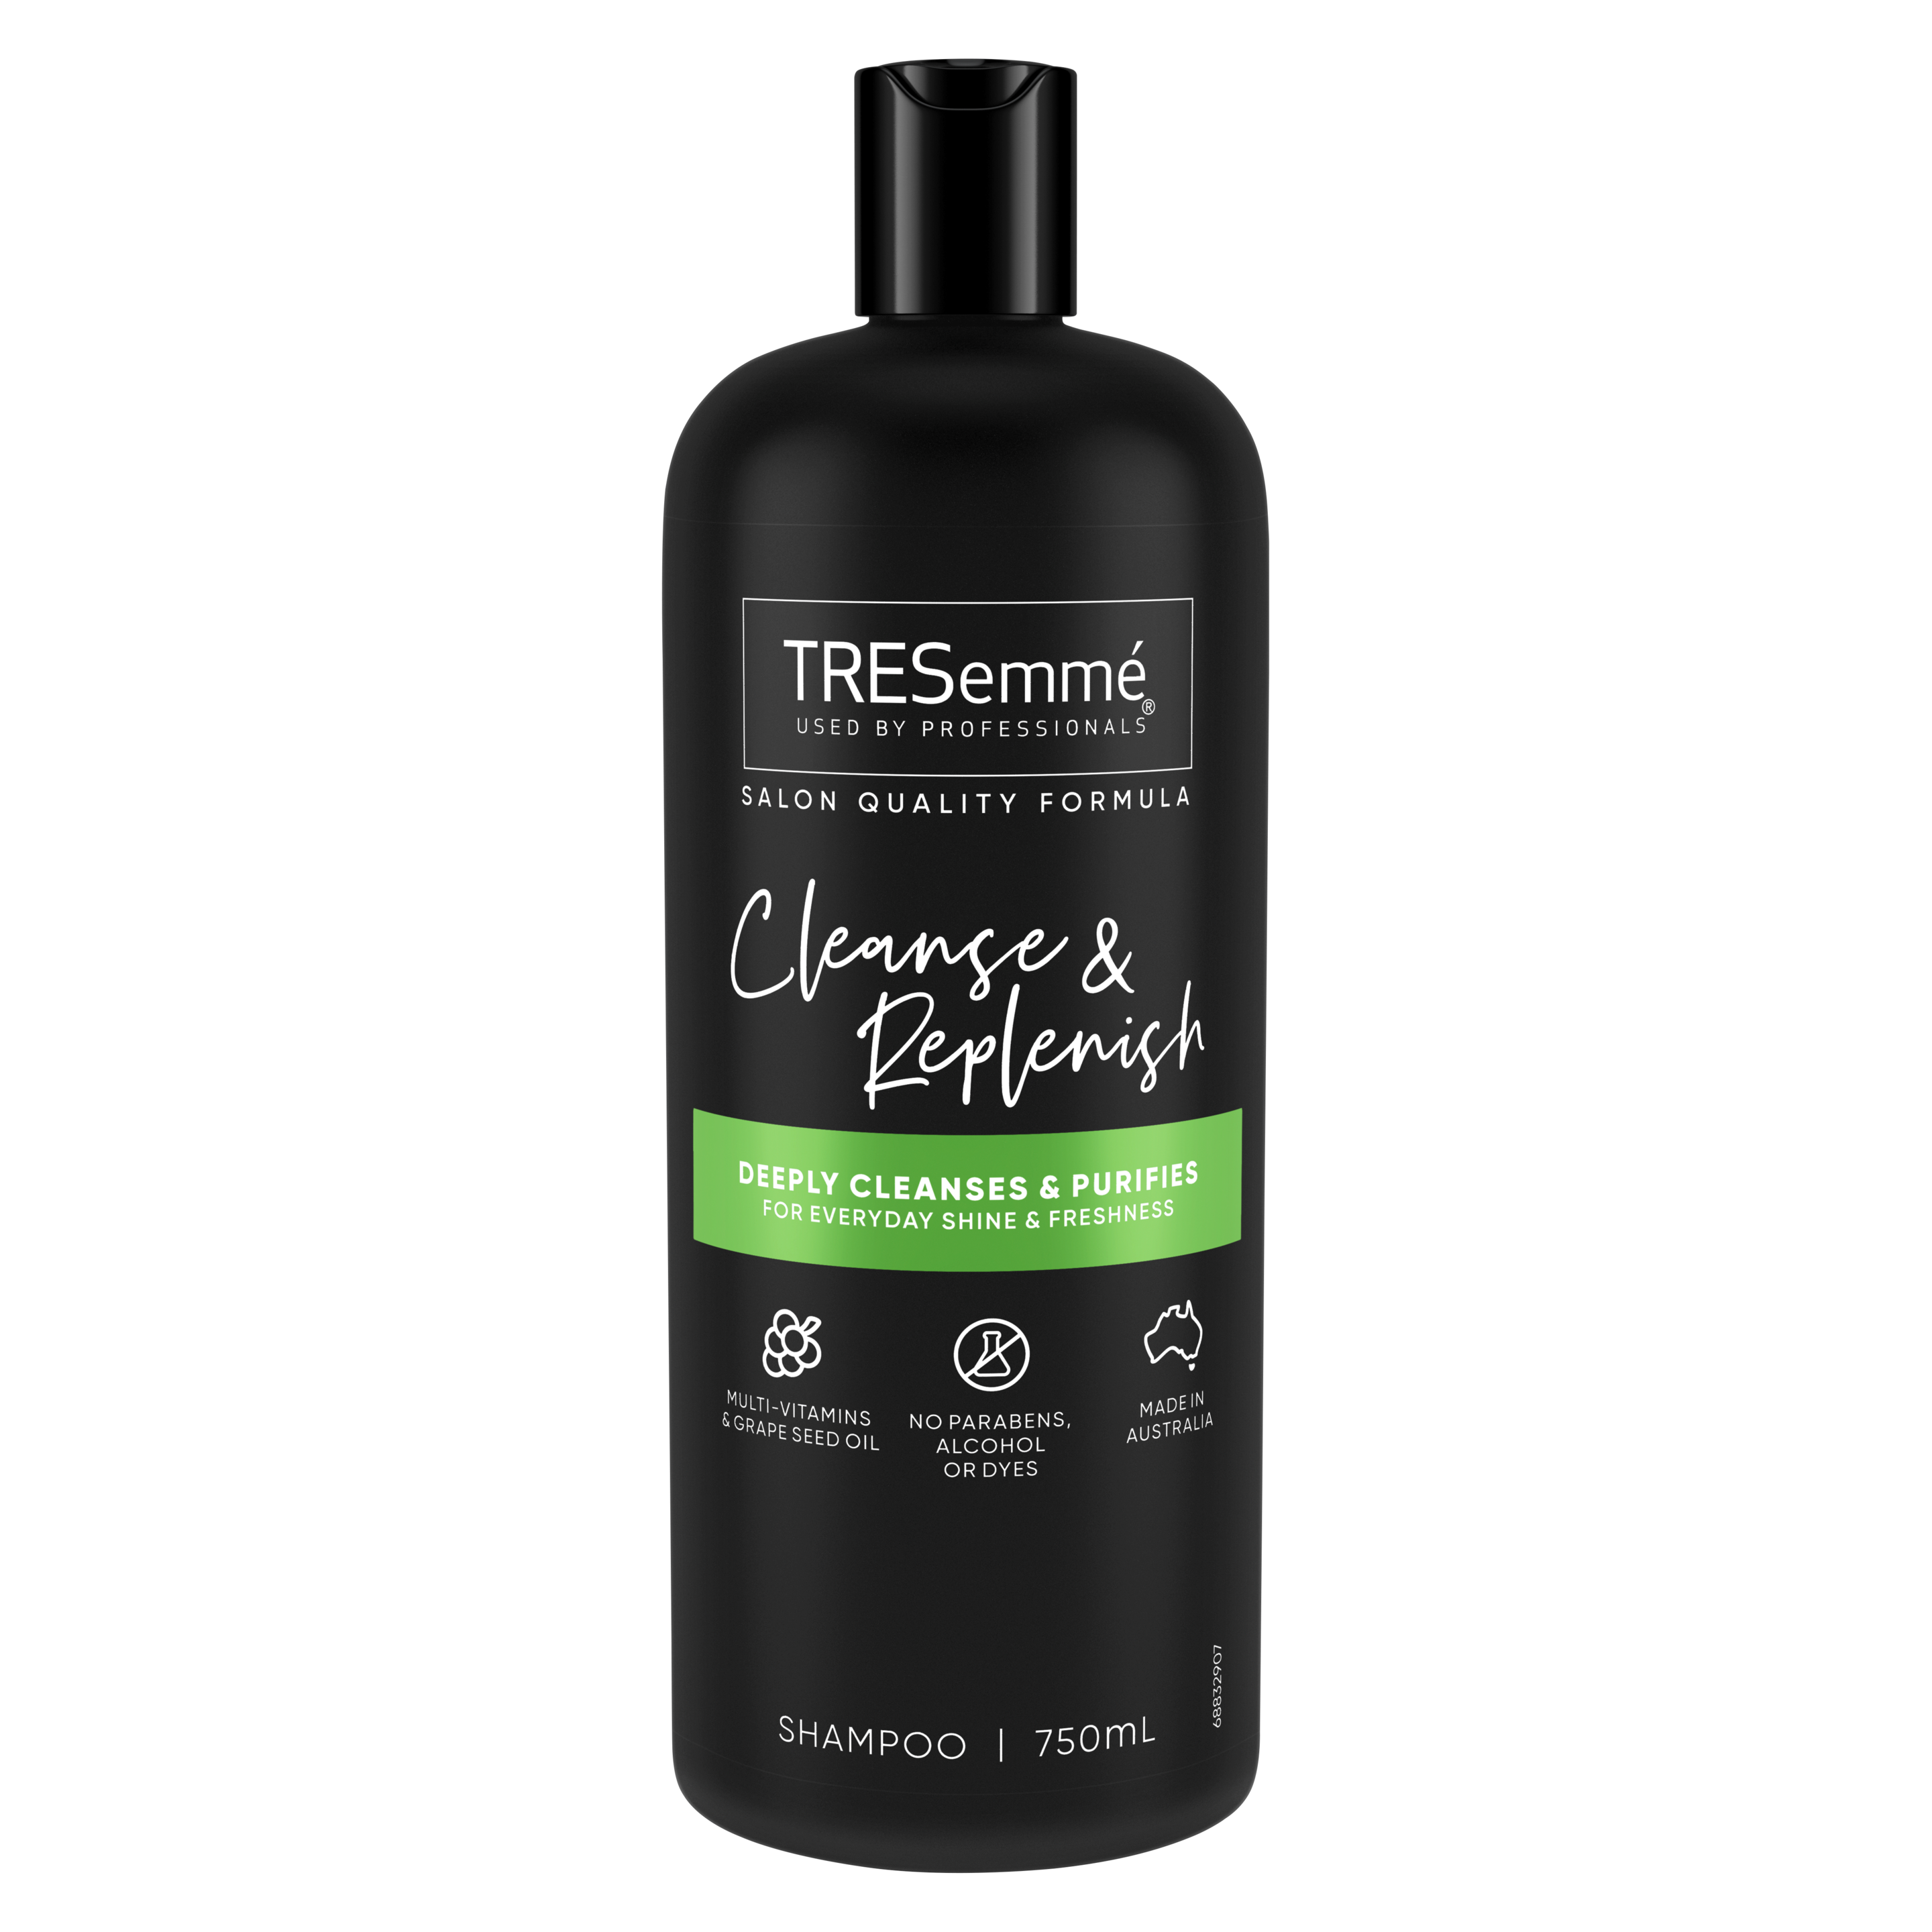 A 750ml bottle of TRESemmé Cleanse & Replenish Shampoo